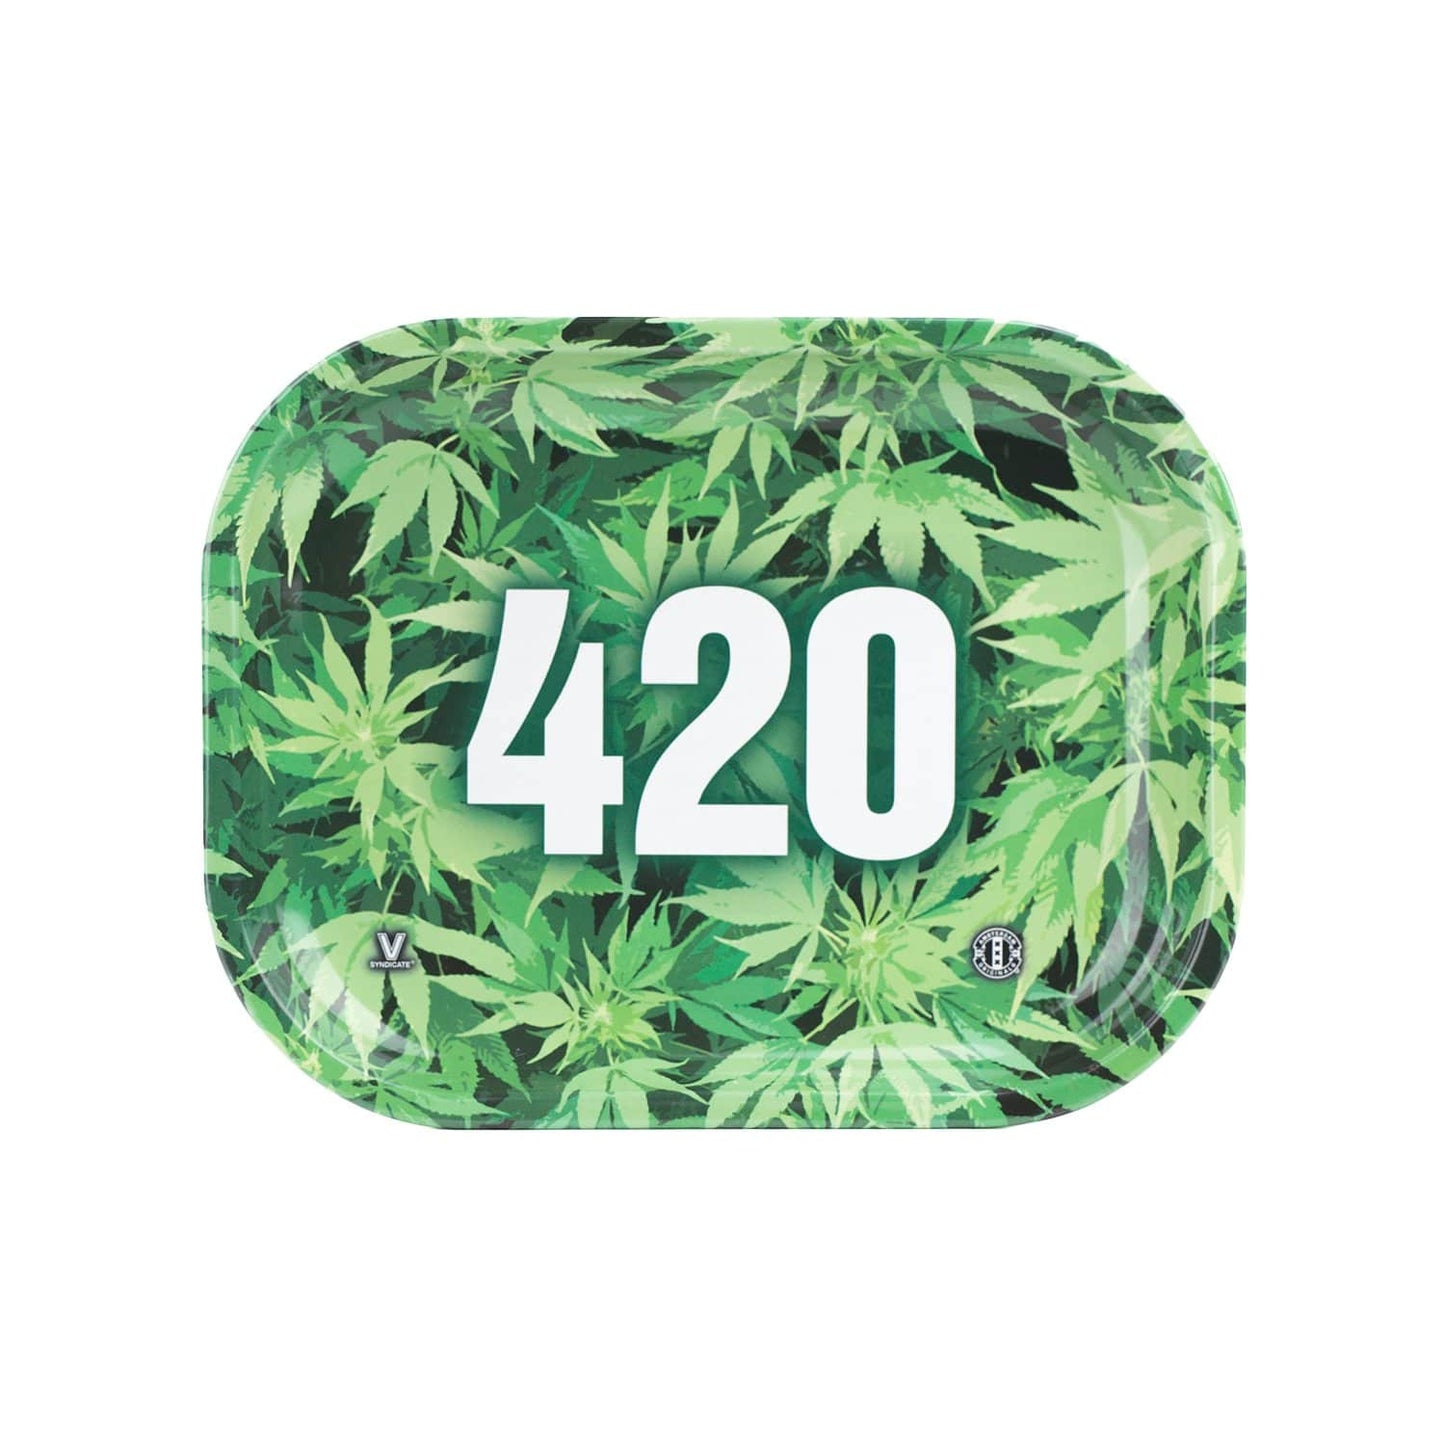 420 Green Metal Rollin' Tray